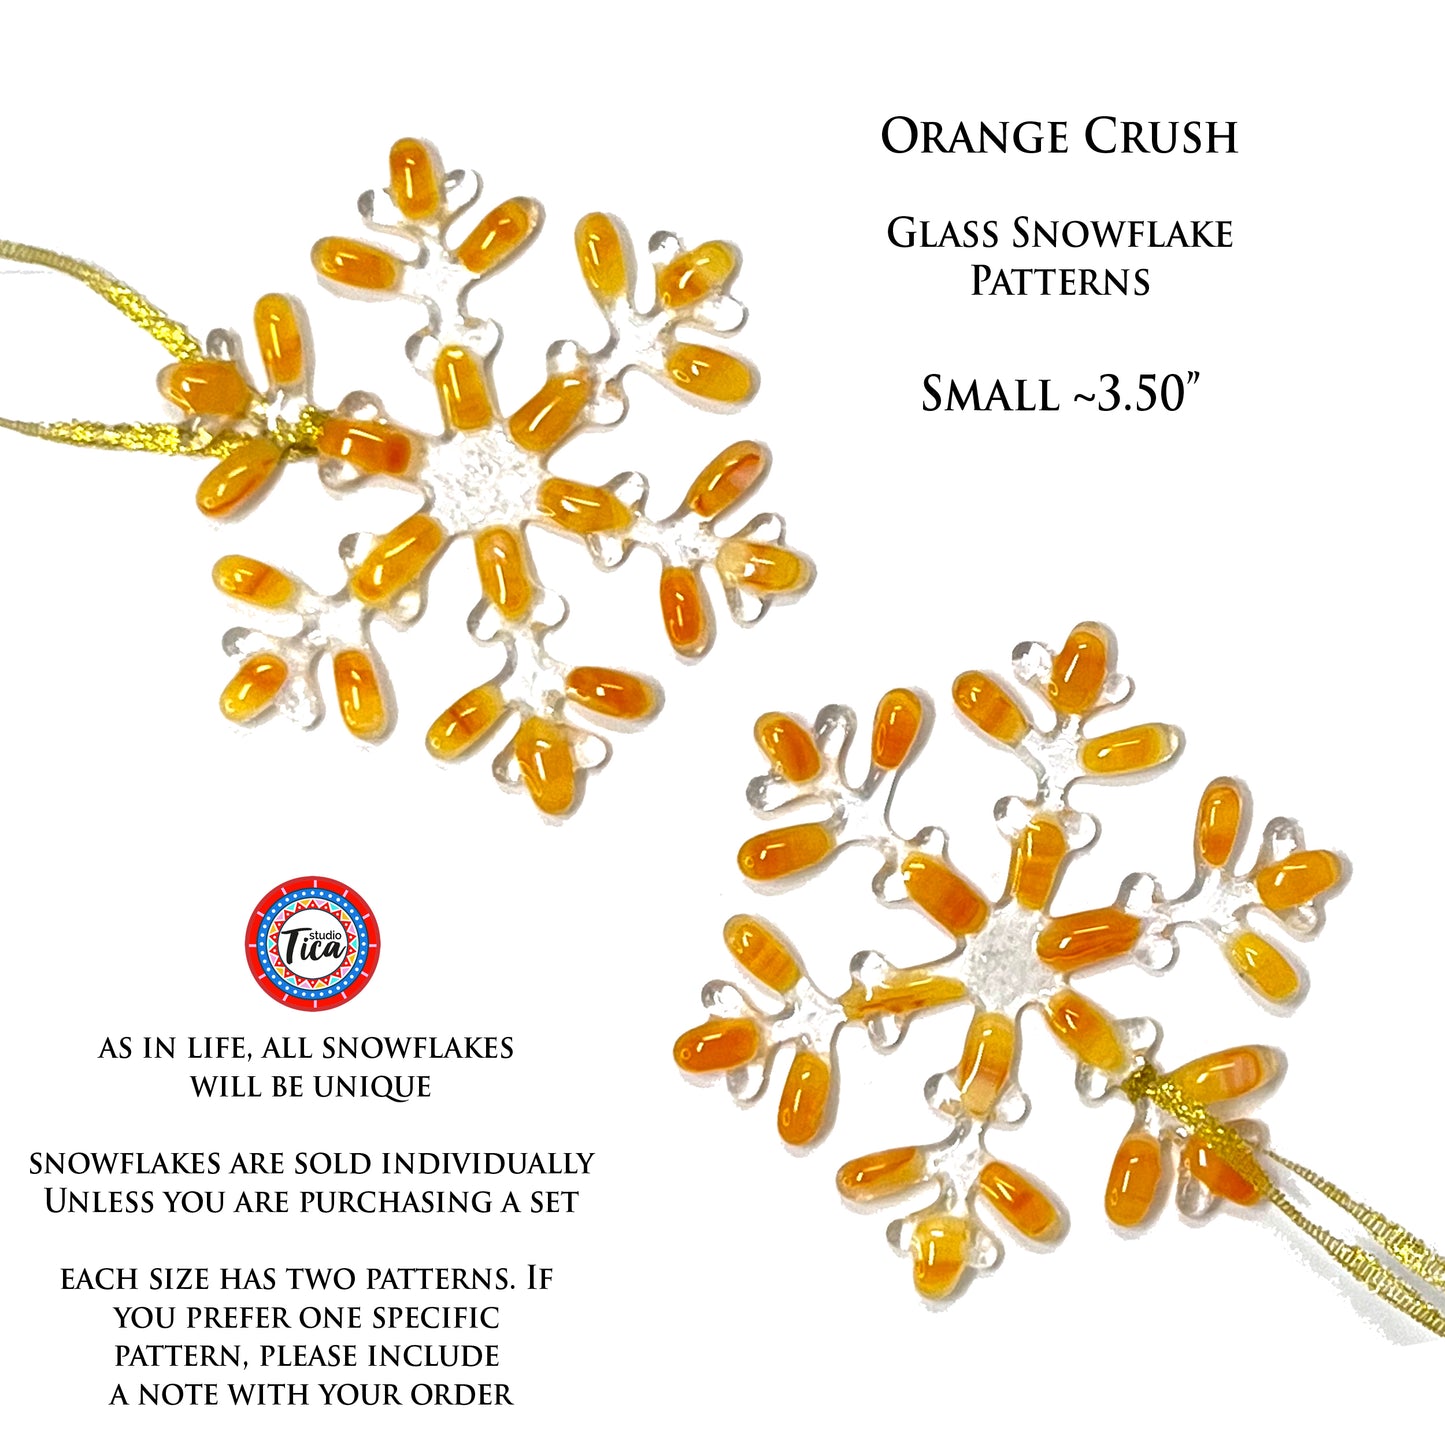 studioTica Orange Crush - Handmade Glass Snowflakes